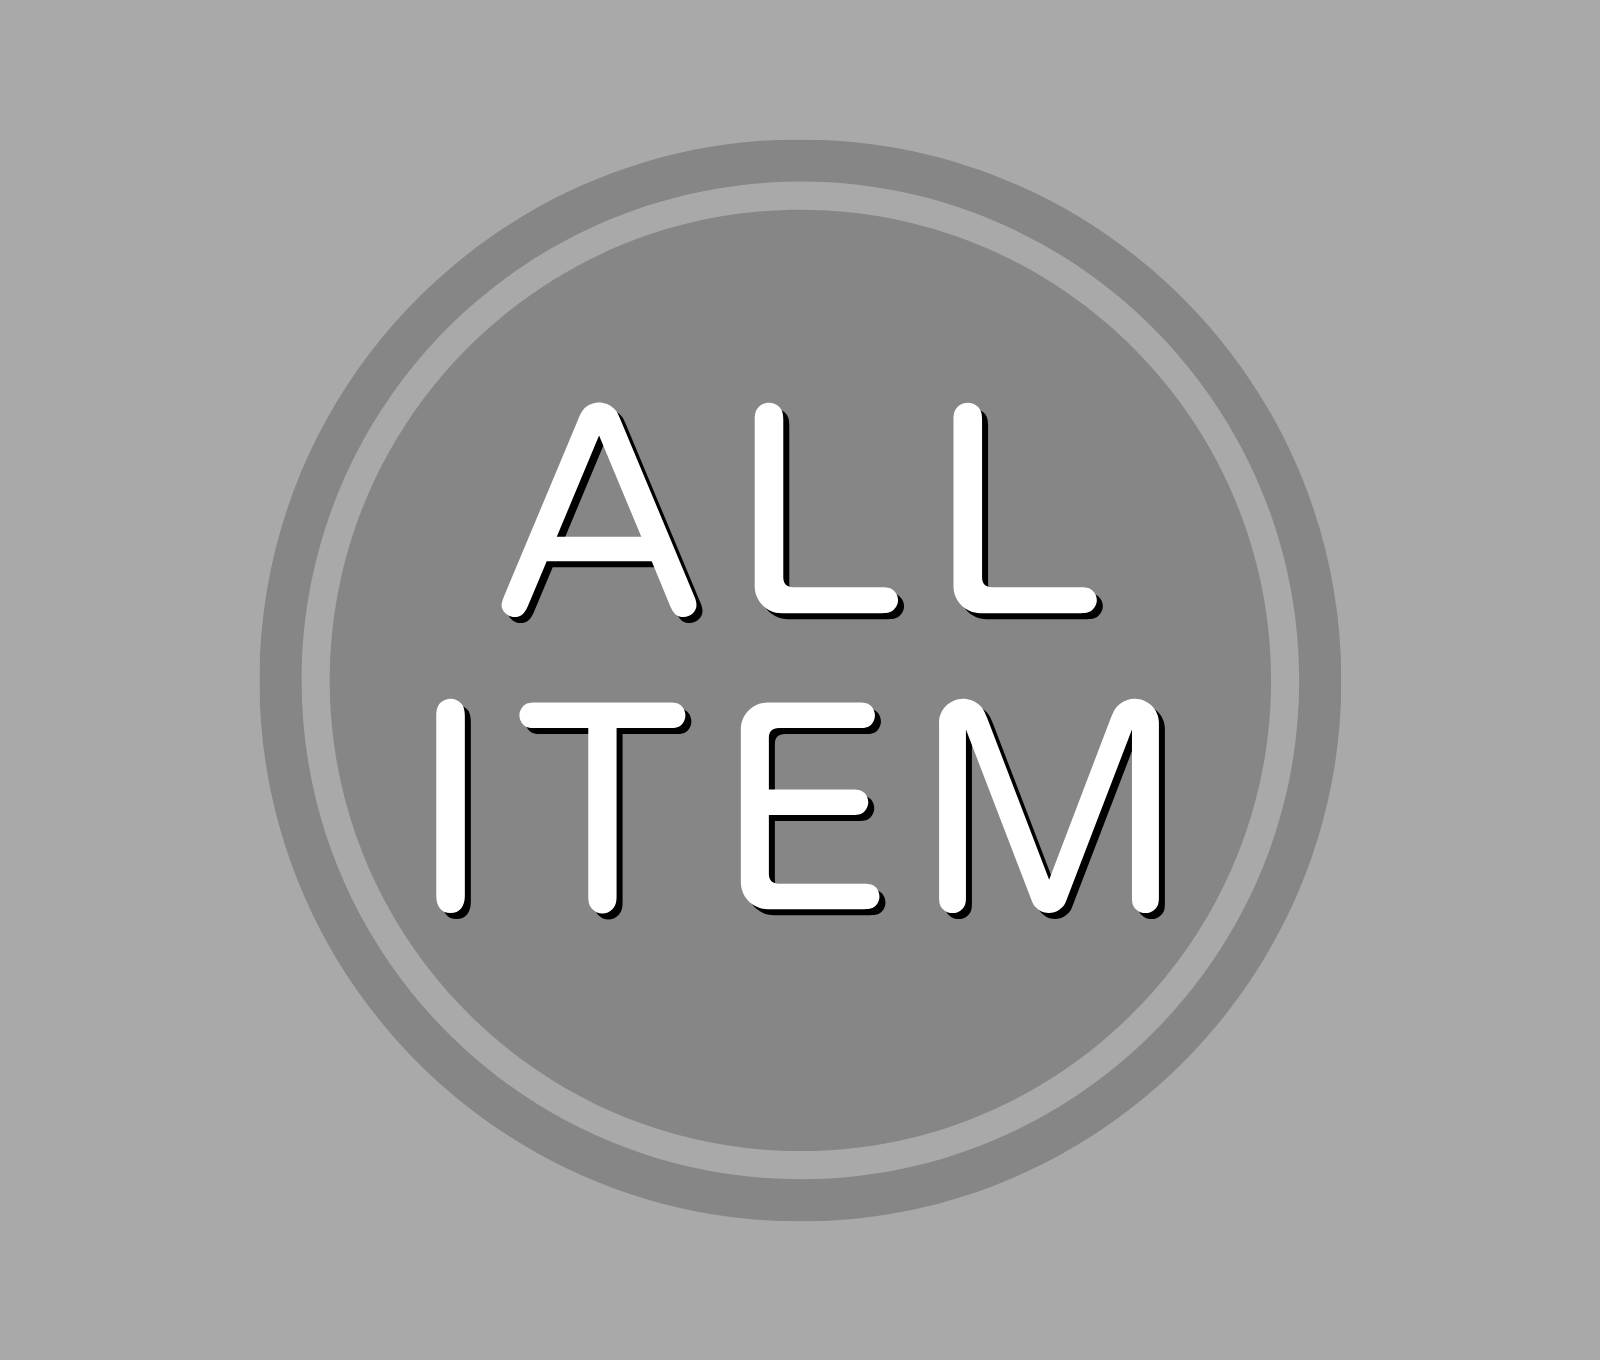 all item